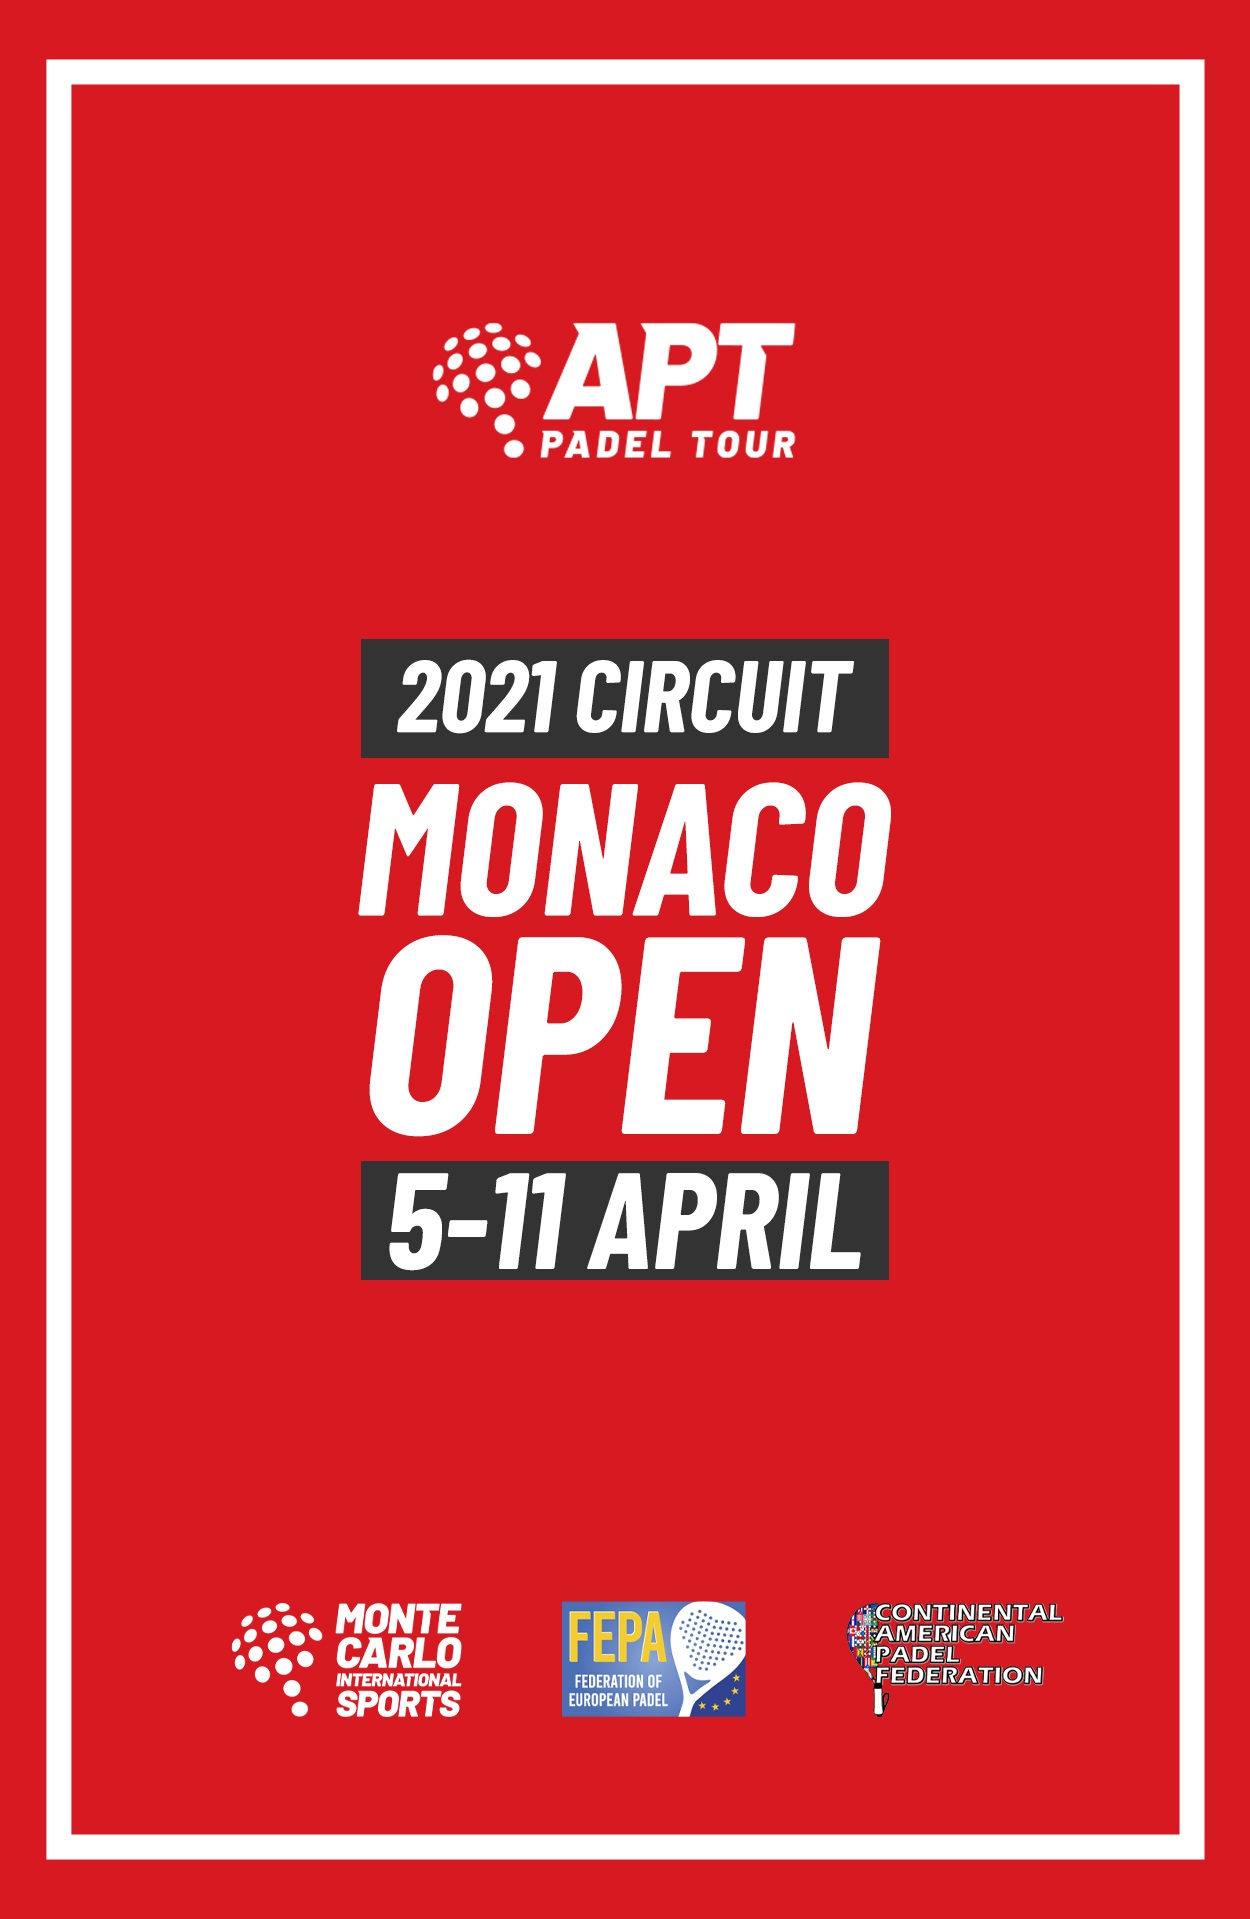 SE VIENE EL MONACO OPEN ATP TOUR 2021 Padel Total